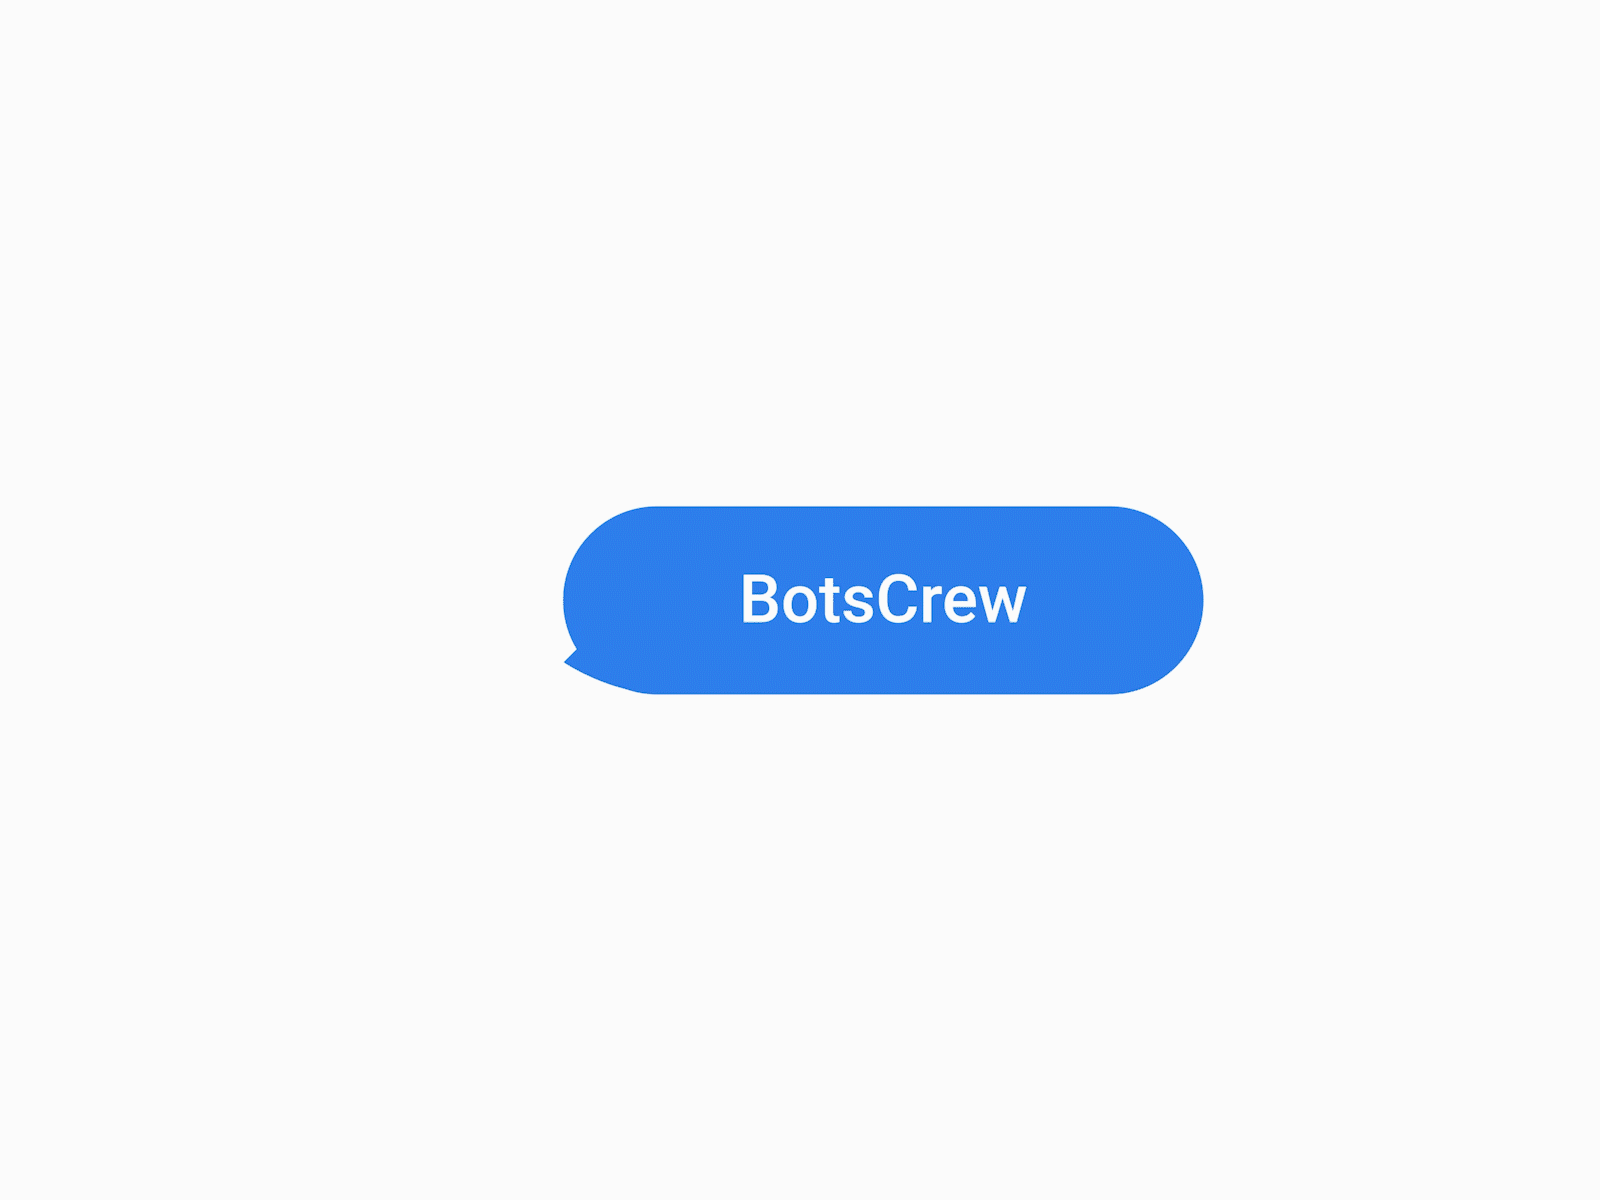 Botscrew logo animation